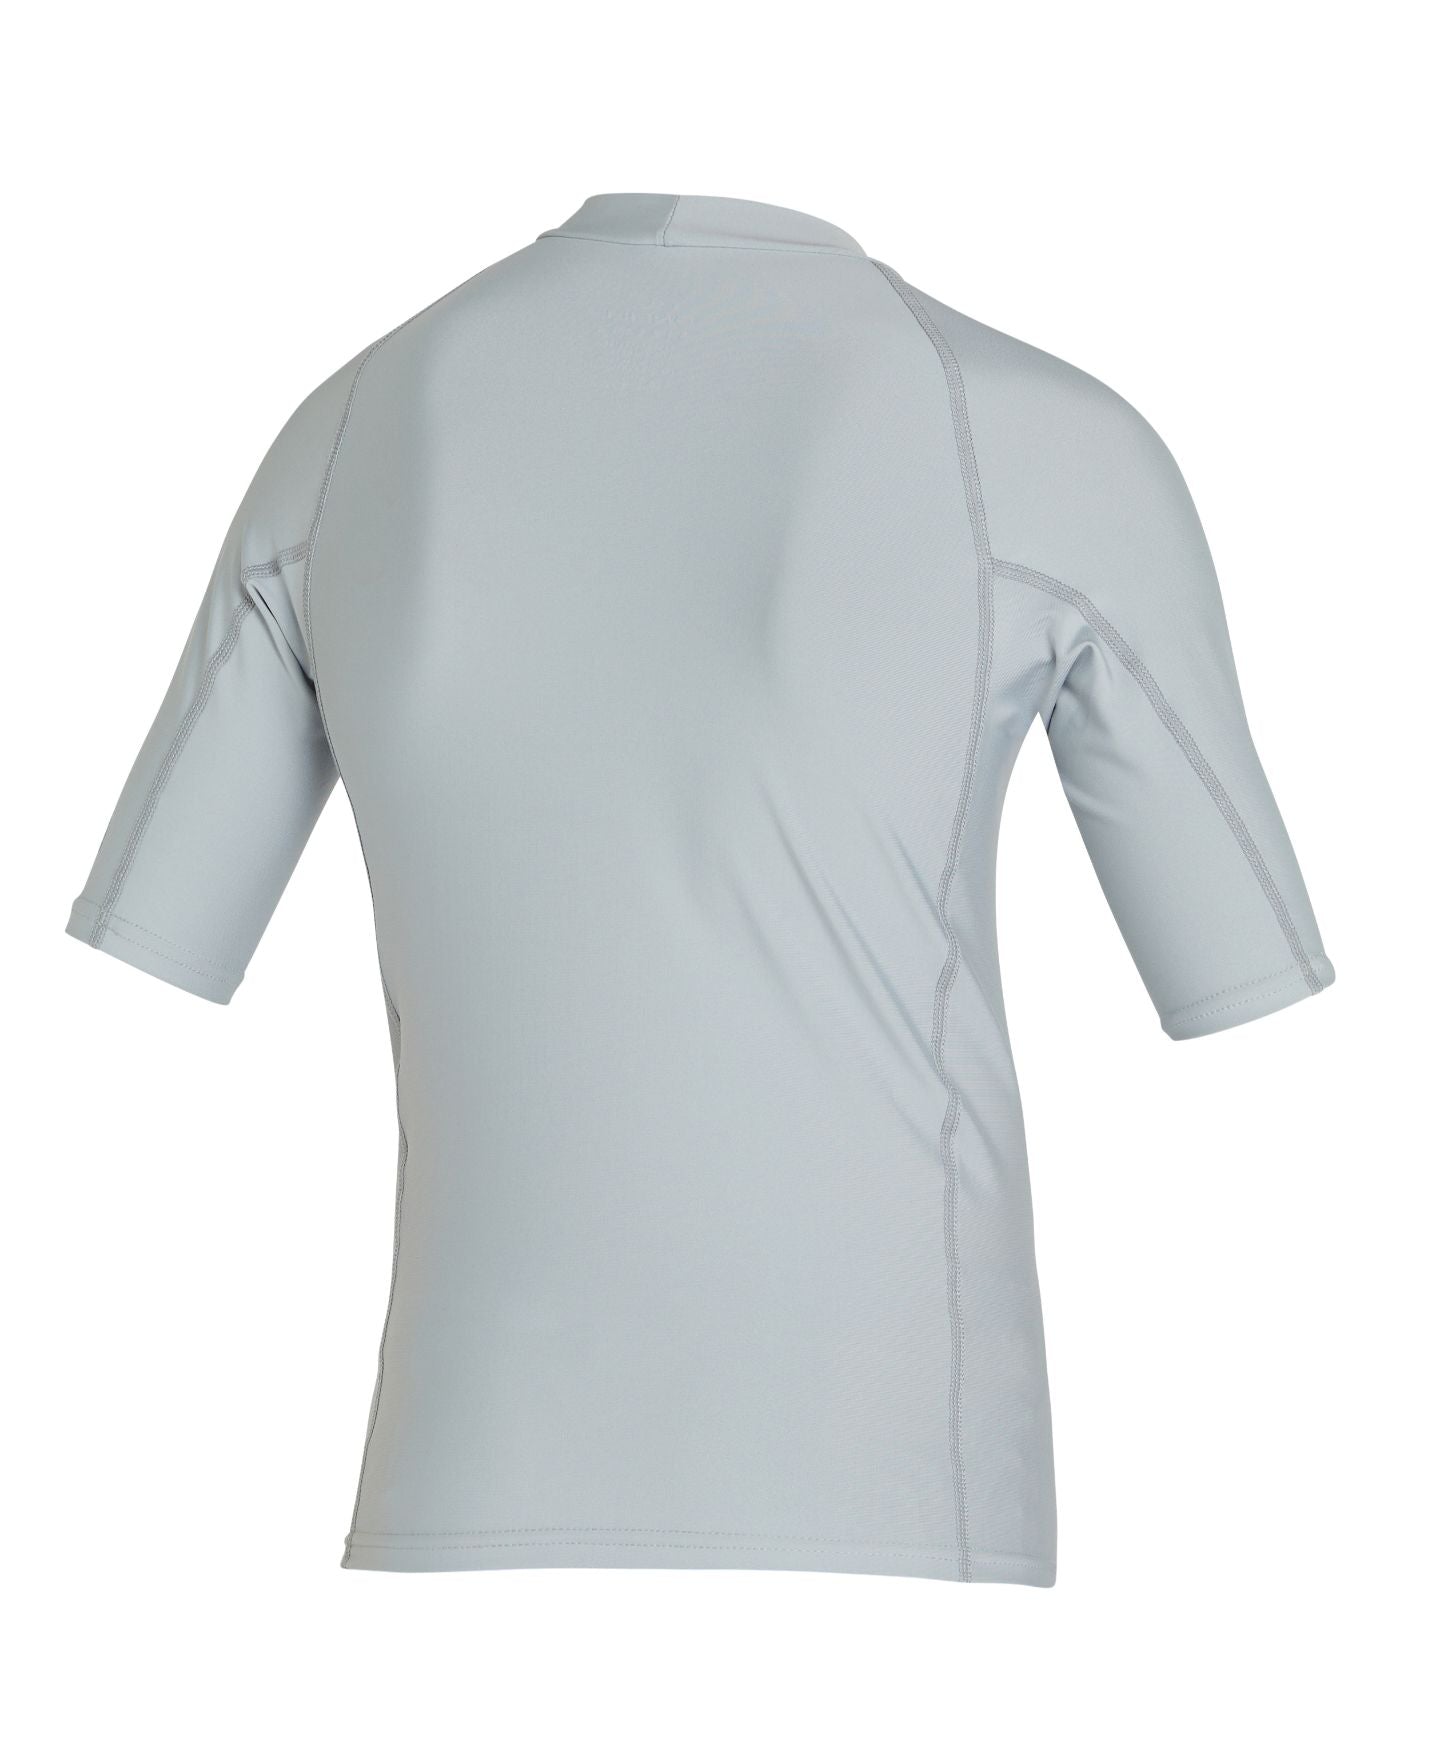 Kid's Reactor UV Short Sleeve Rash Vest - Cool Grey